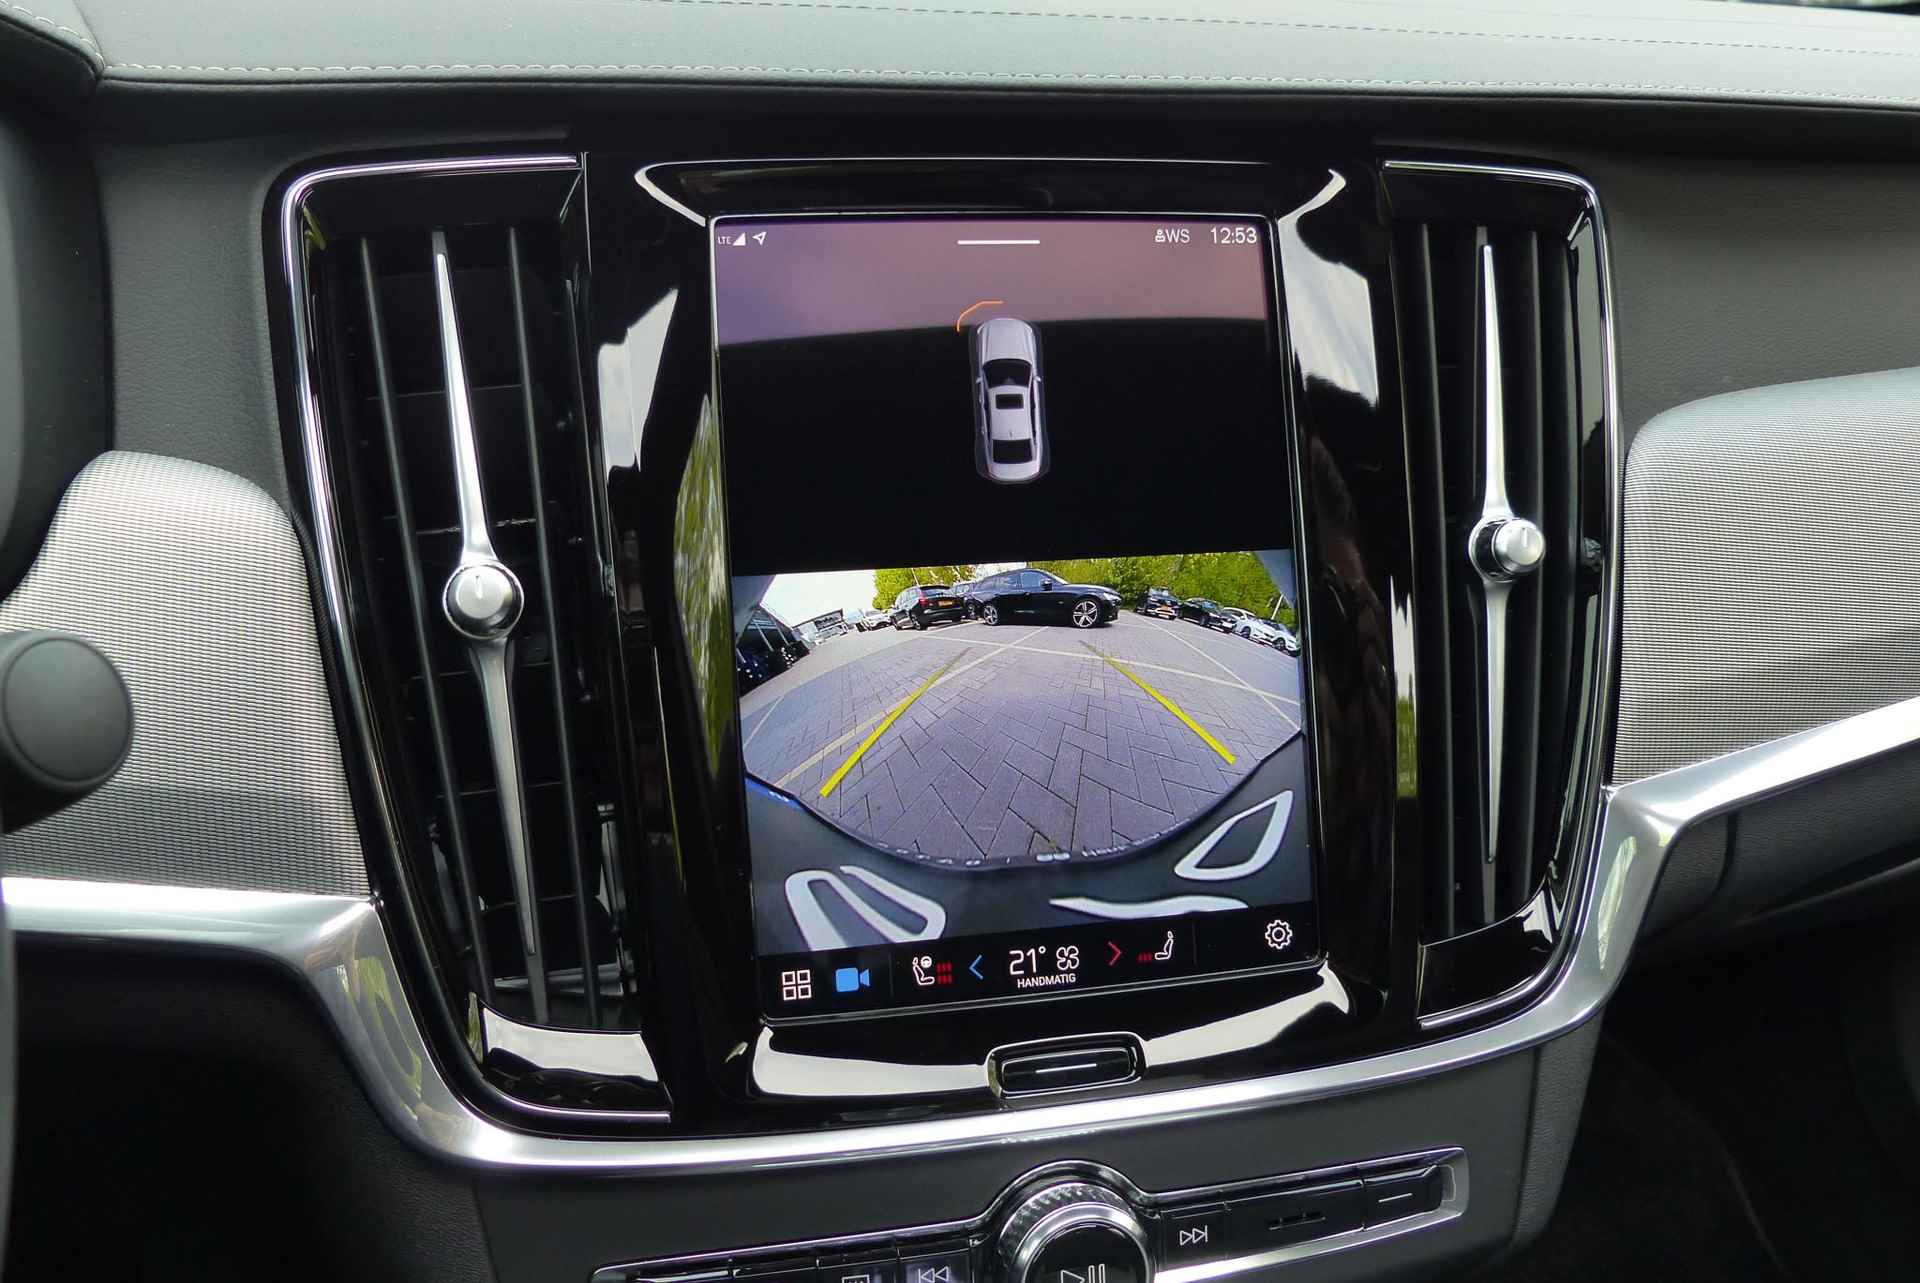 Volvo S90 B5 251PK AUT8 Ultimate Dark Adaptieve Cruise Control met Pilot Assist, Elektrisch bedienbaar panoramisch schuif-/kanteldak, Premium audio by Harman Kardon, Elektrisch bedienbare voorstoelen, Verwarmbare voorstoelen + stuurwiel, Verwarmbare achterbank, Park Assist voor + achter, Parkeercamera, 360° camera, Head-Up display, Blind Spot Information System, Keyless entree, 4-Zone Climate Control, Apple CarPlay/Android Auto, 20'' Lichtmetalen wielen - 26/27